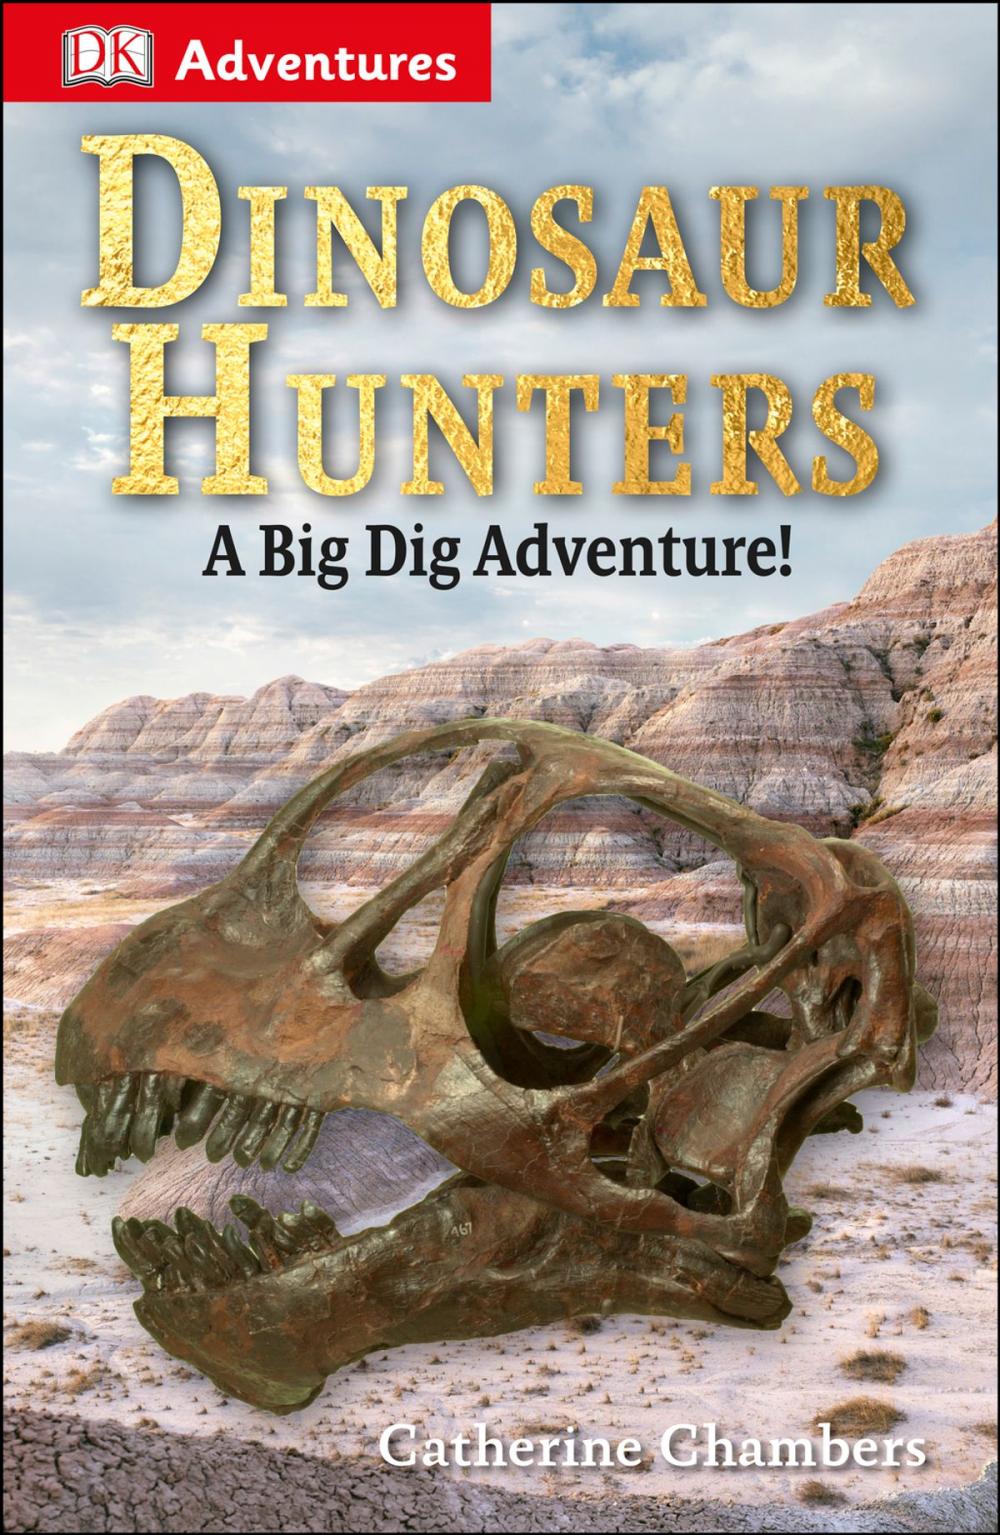 Big bigCover of DK Adventures: Dinosaur Hunters